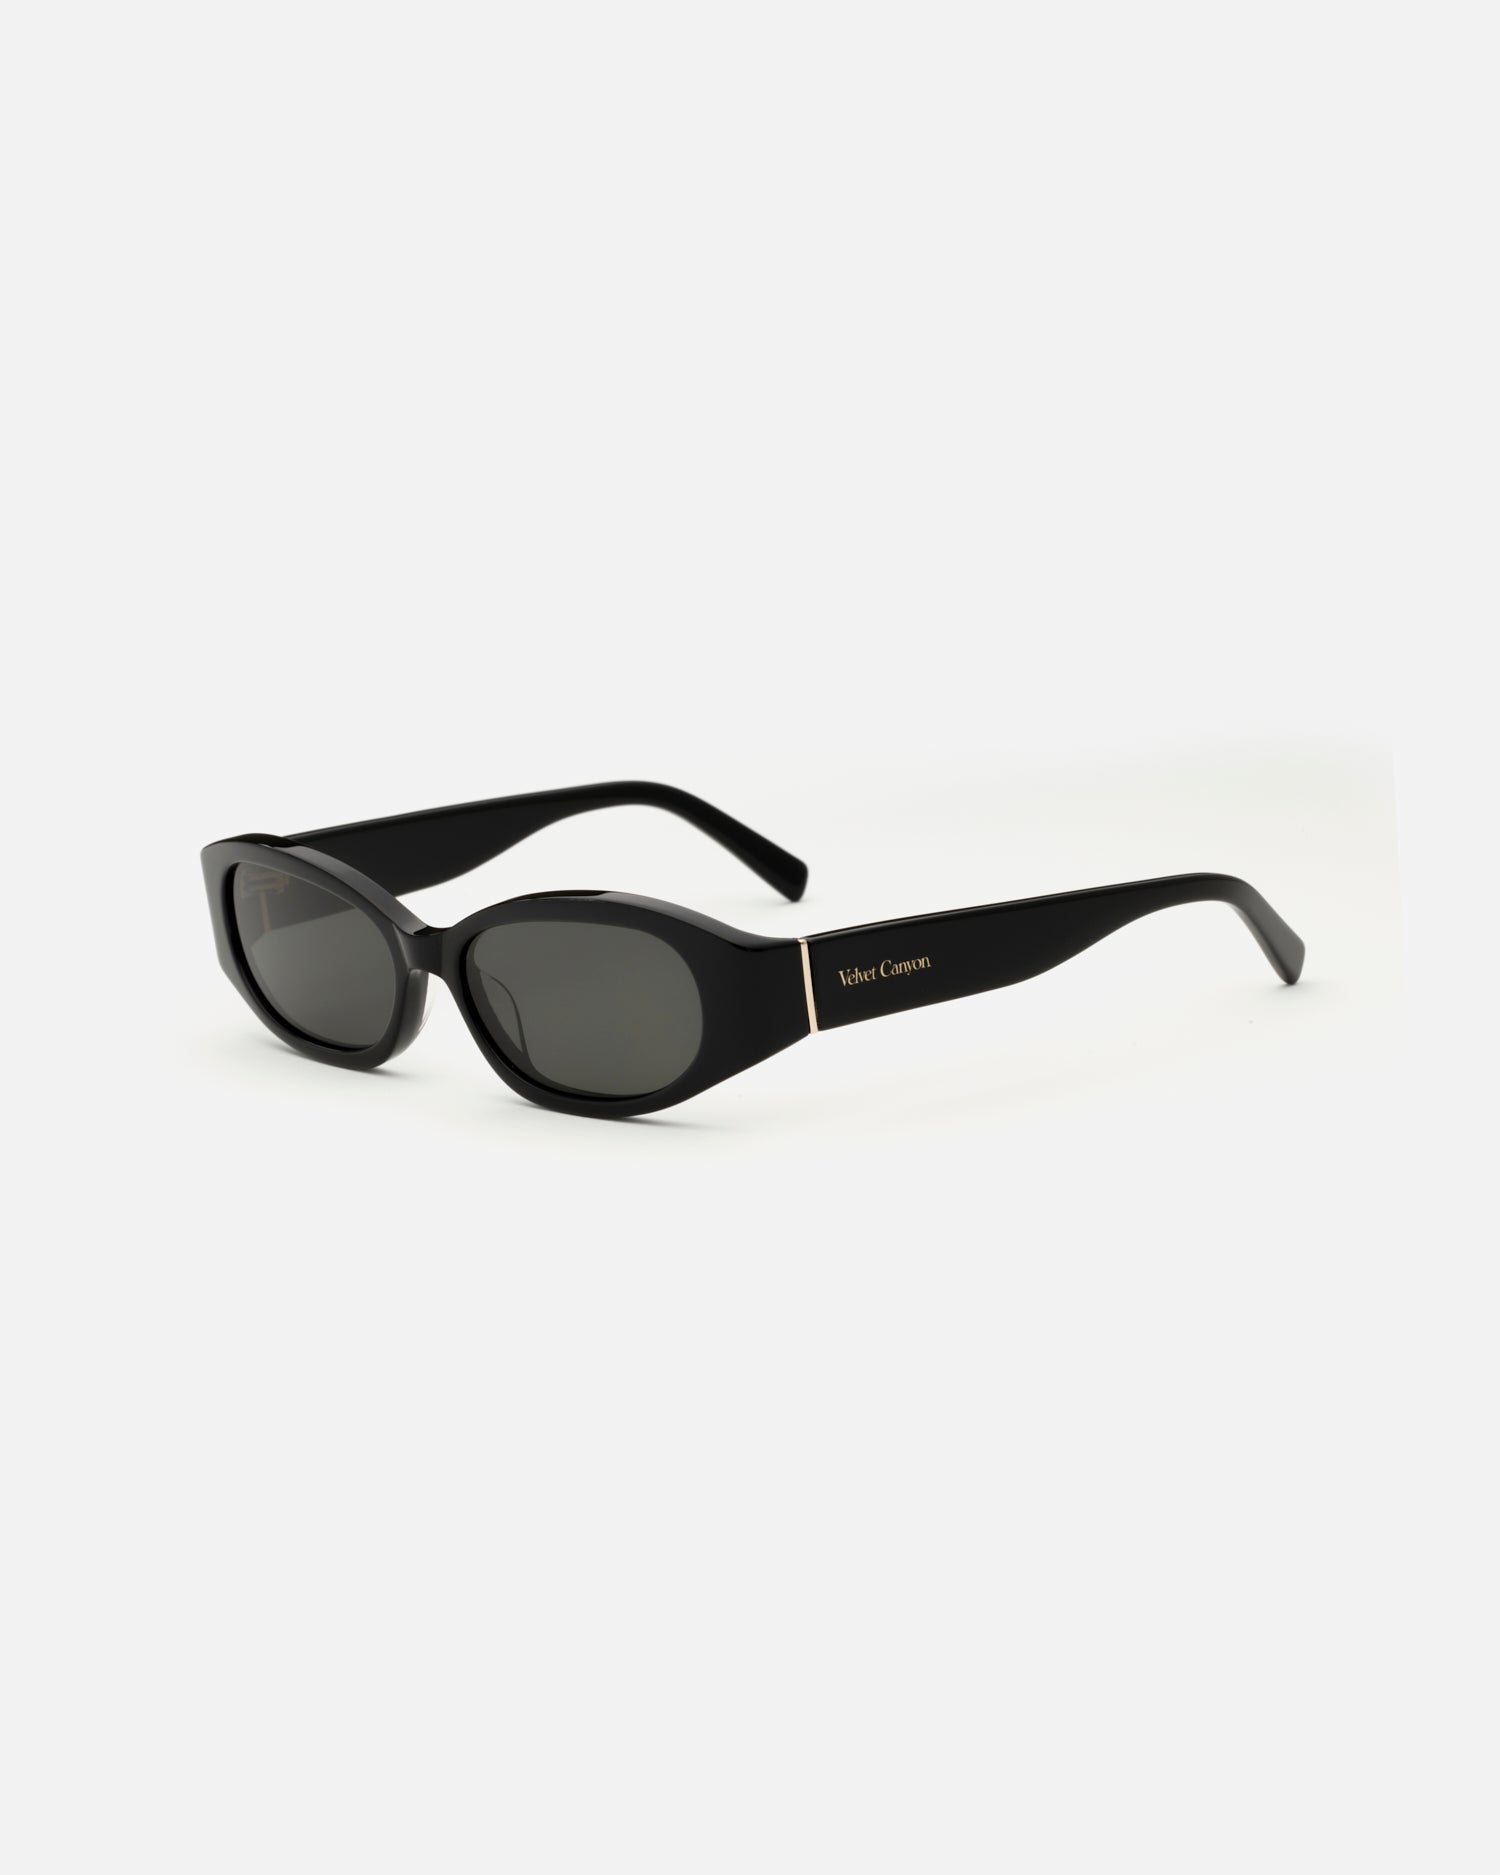 Momentum luxe sunglasses by Velvet Canyon in Black